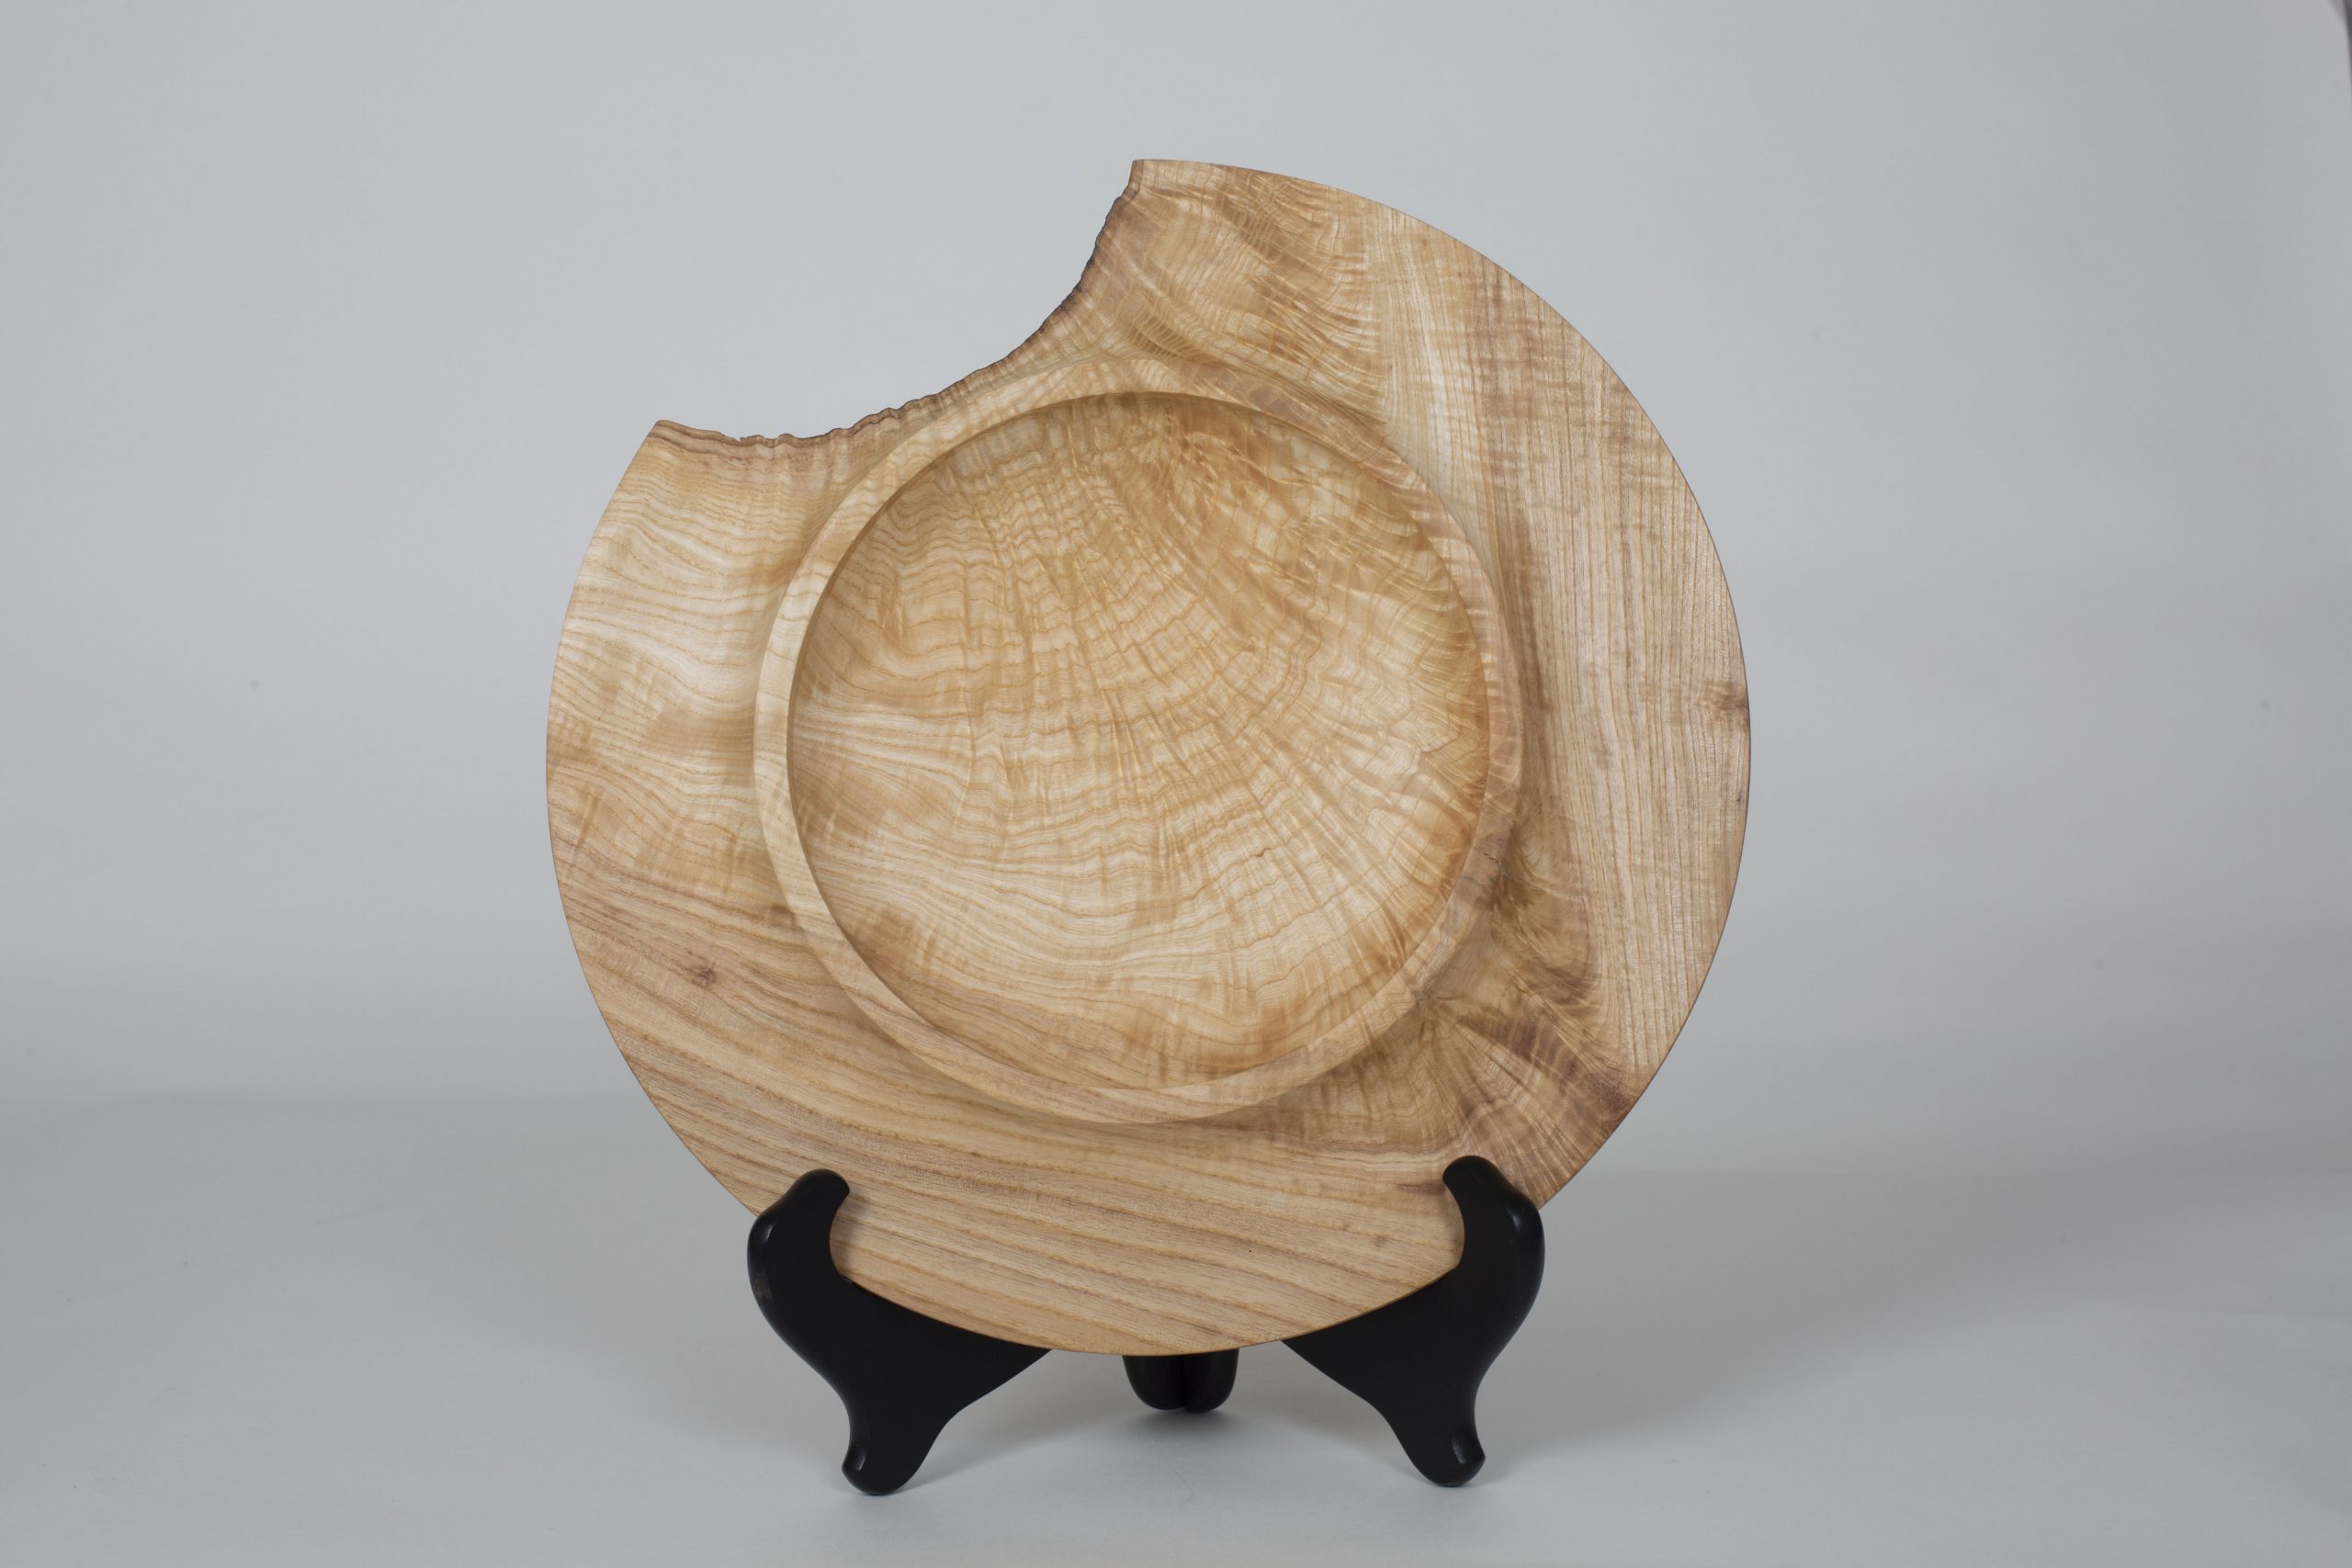 Michael Doerr Woodworking "Turned Wooden Platter" Ash Wood 2”x11”